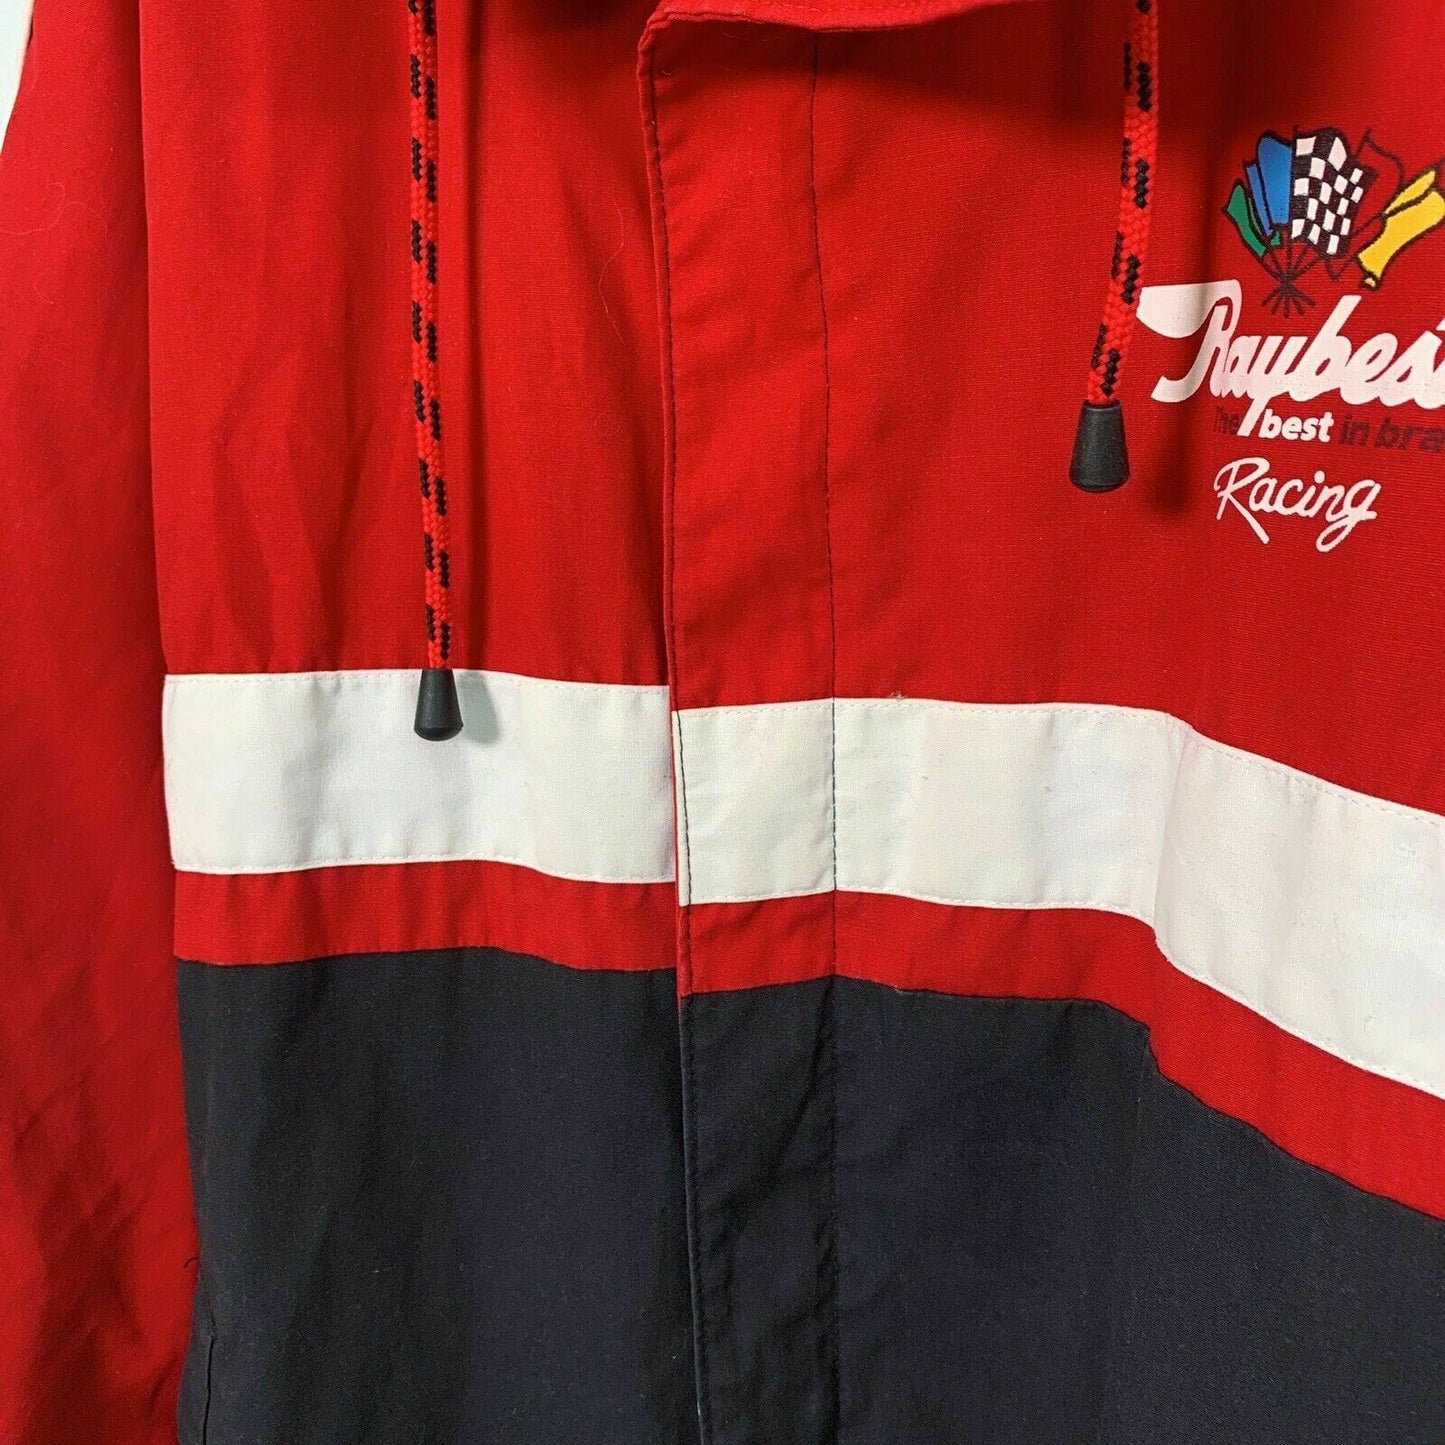 Vintage Swingster Raybestos Racing Brakes Nylon Jacket, Red - Size XL - parsimonyshoppes